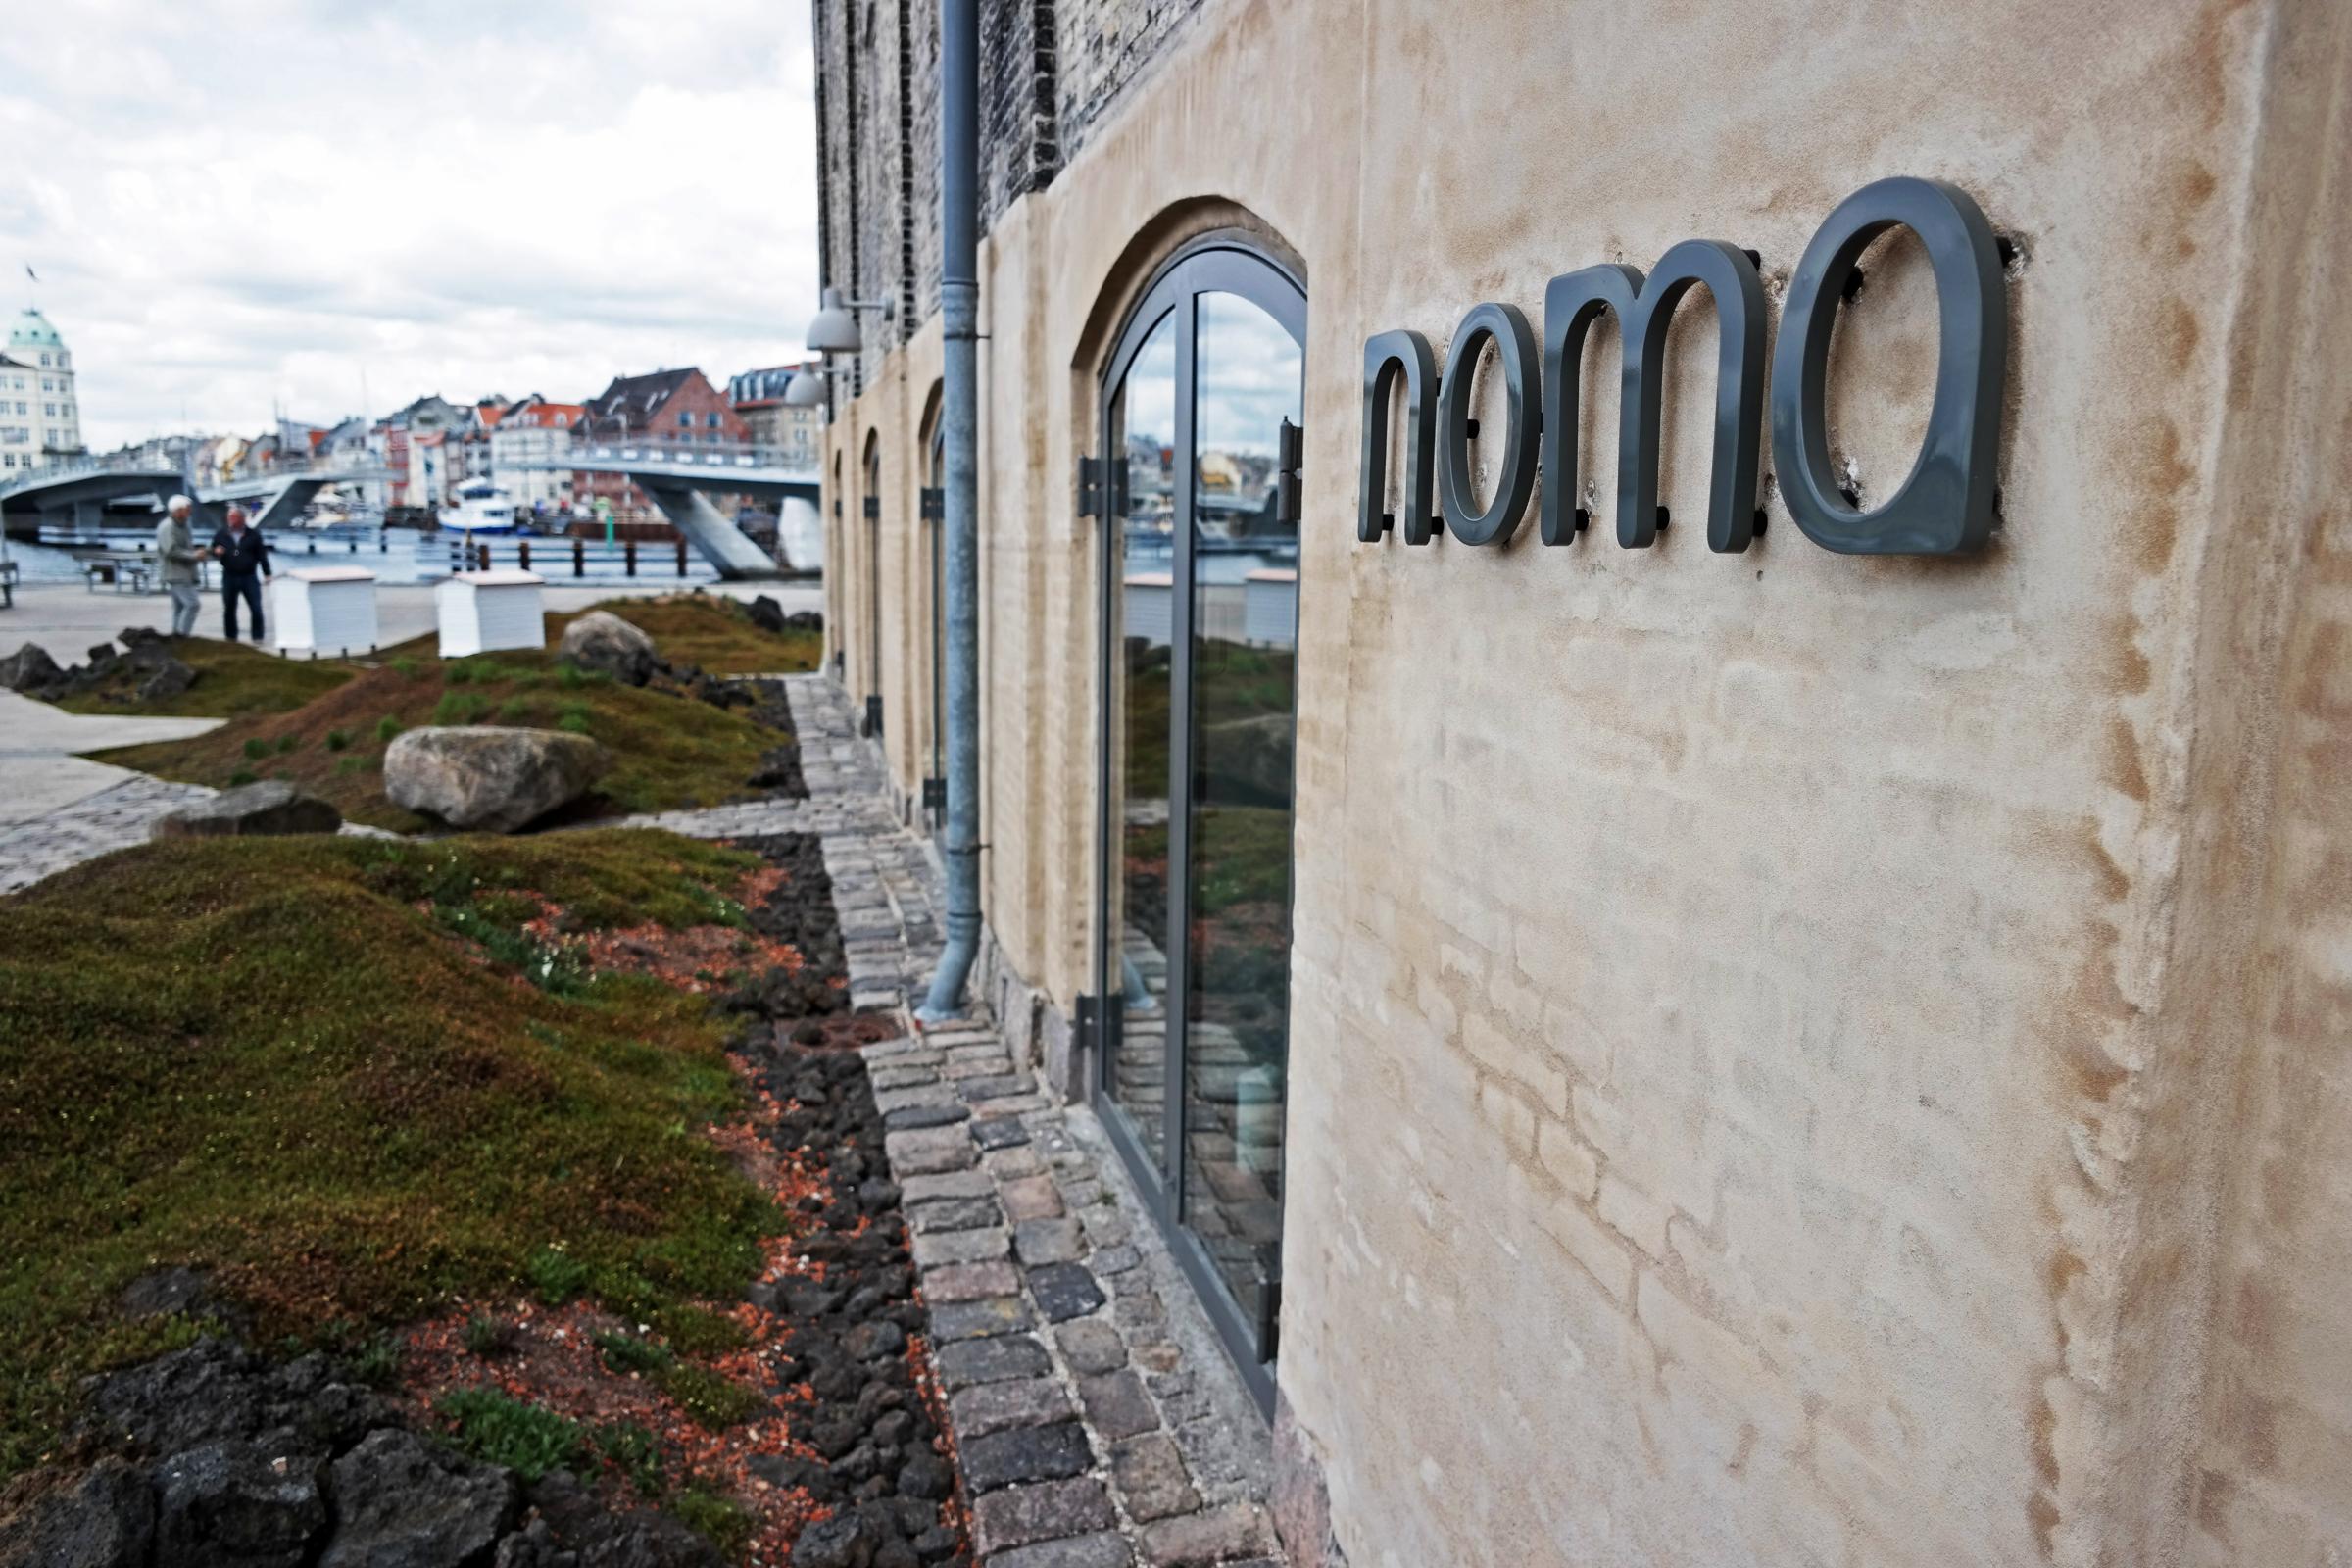 The world's best restaurant "Noma" in Copenhagen on May 5, 2014.